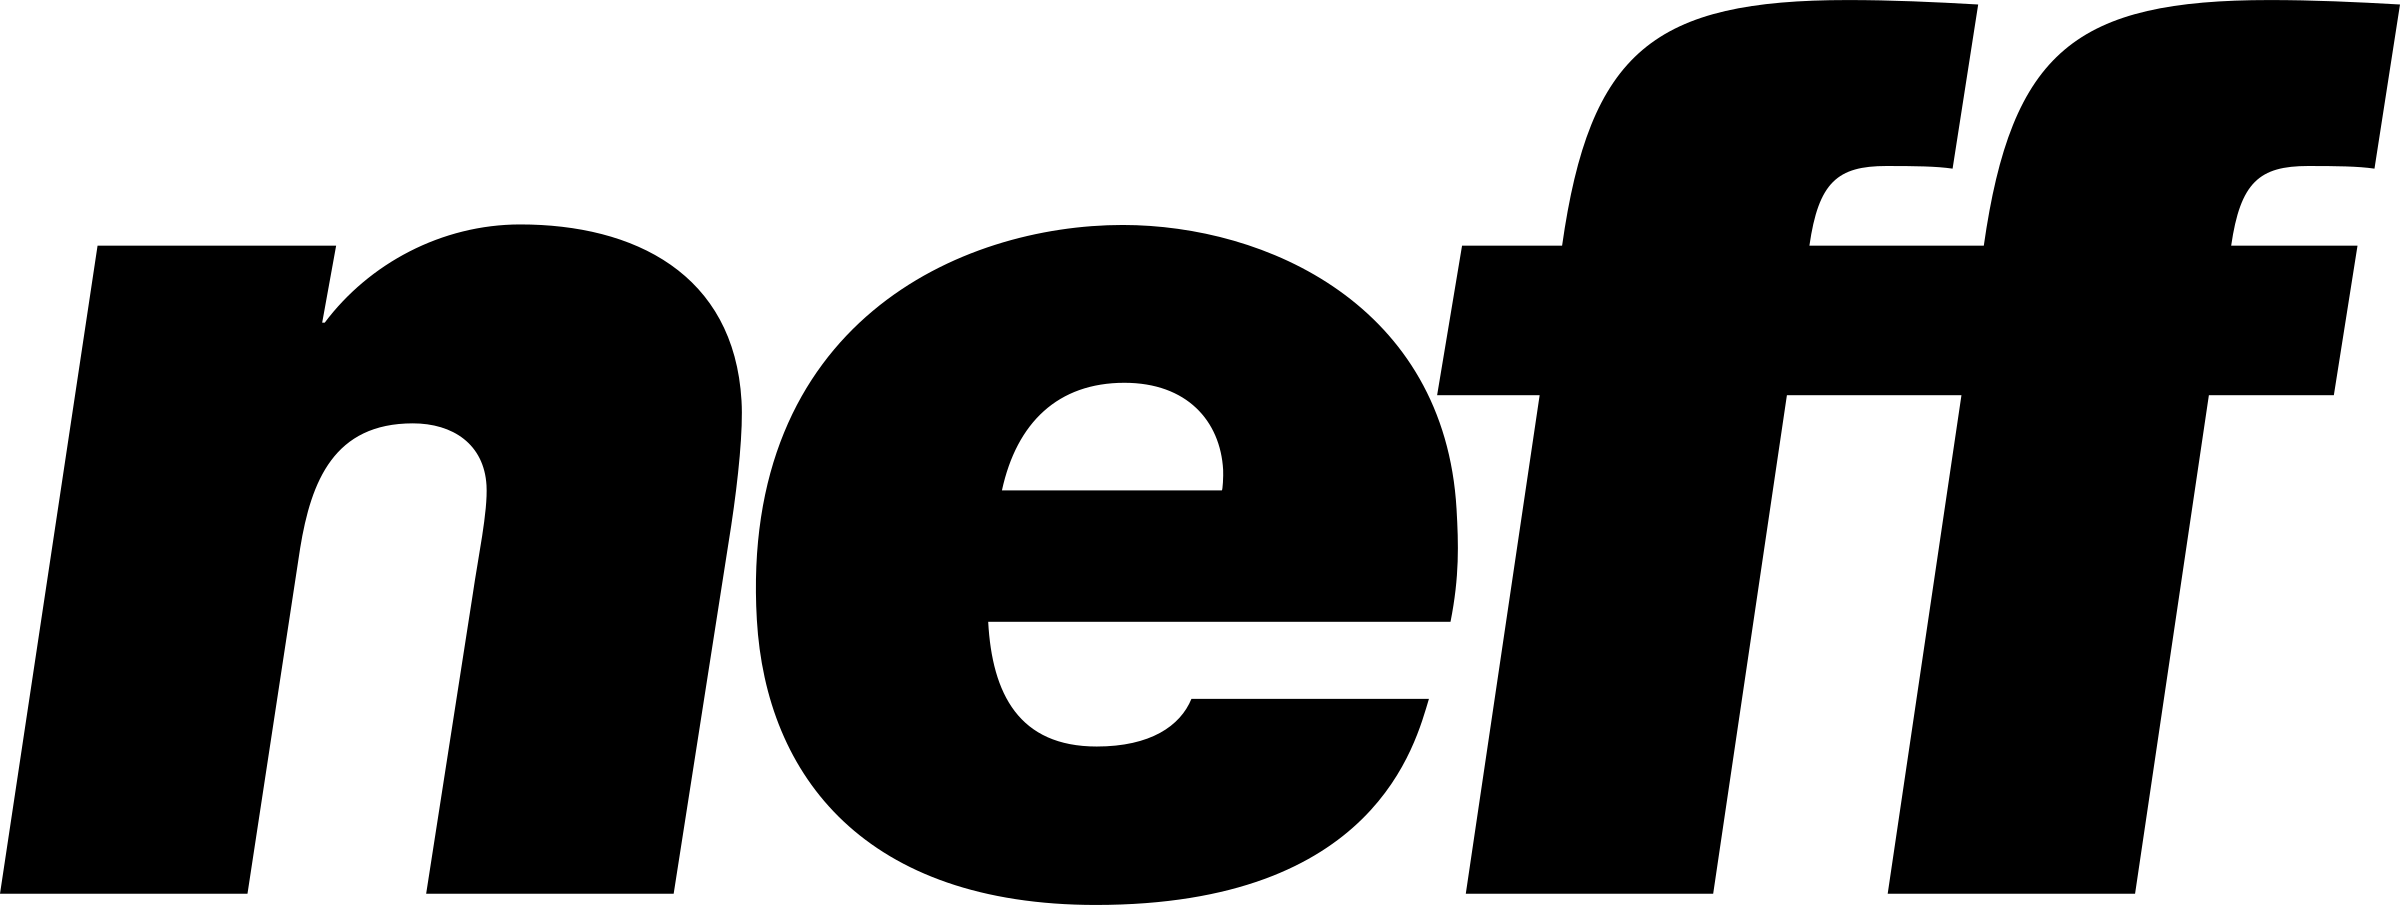 Neff with Hat Logo - Neff Logo PNG Transparent & SVG Vector - Freebie Supply